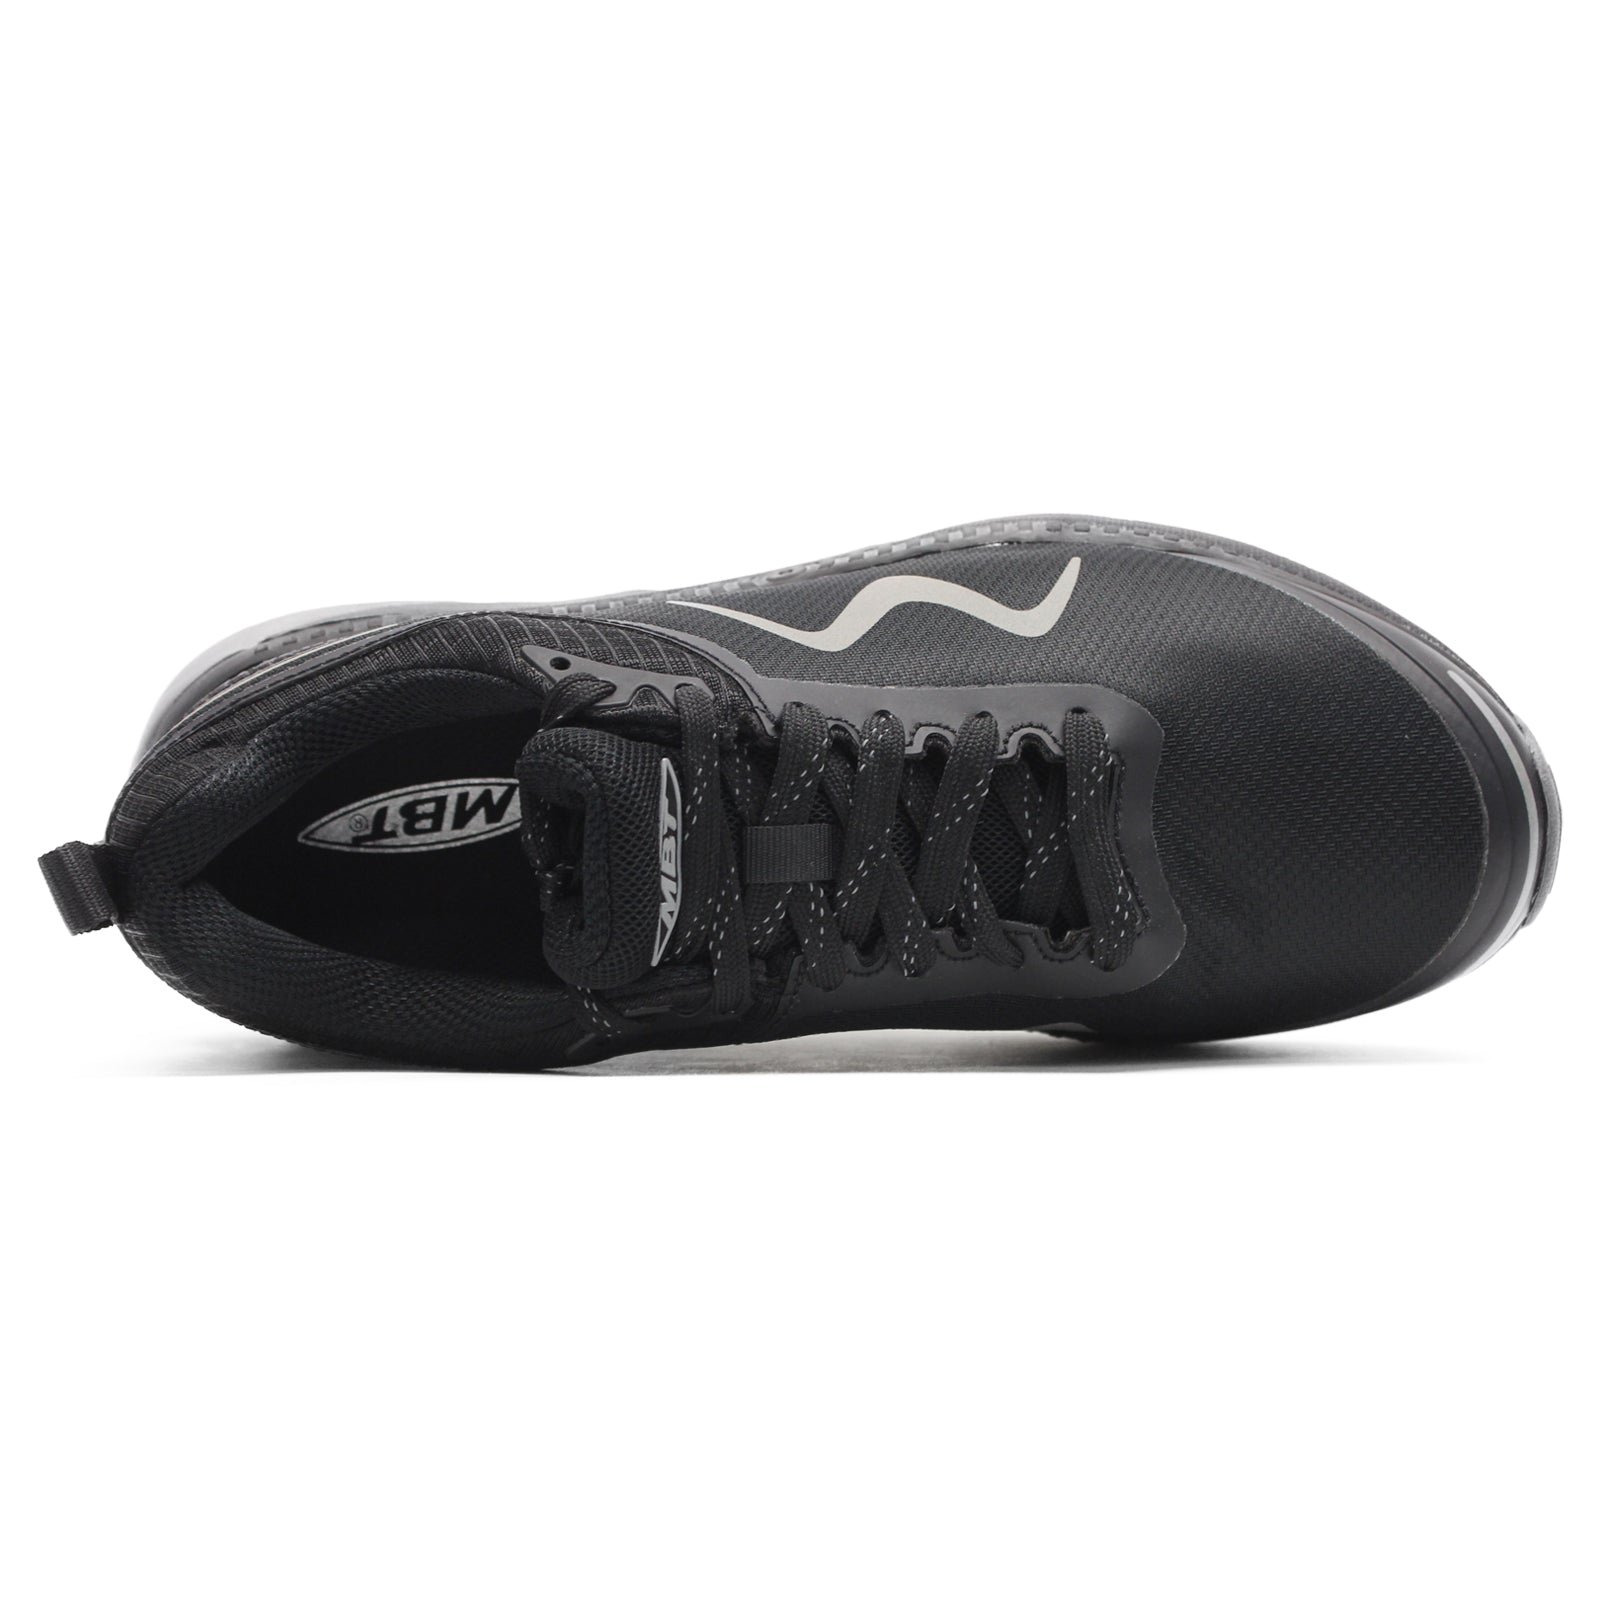 MBT MTR-1600 GTX Mesh Men's Running Sneakers#color_black